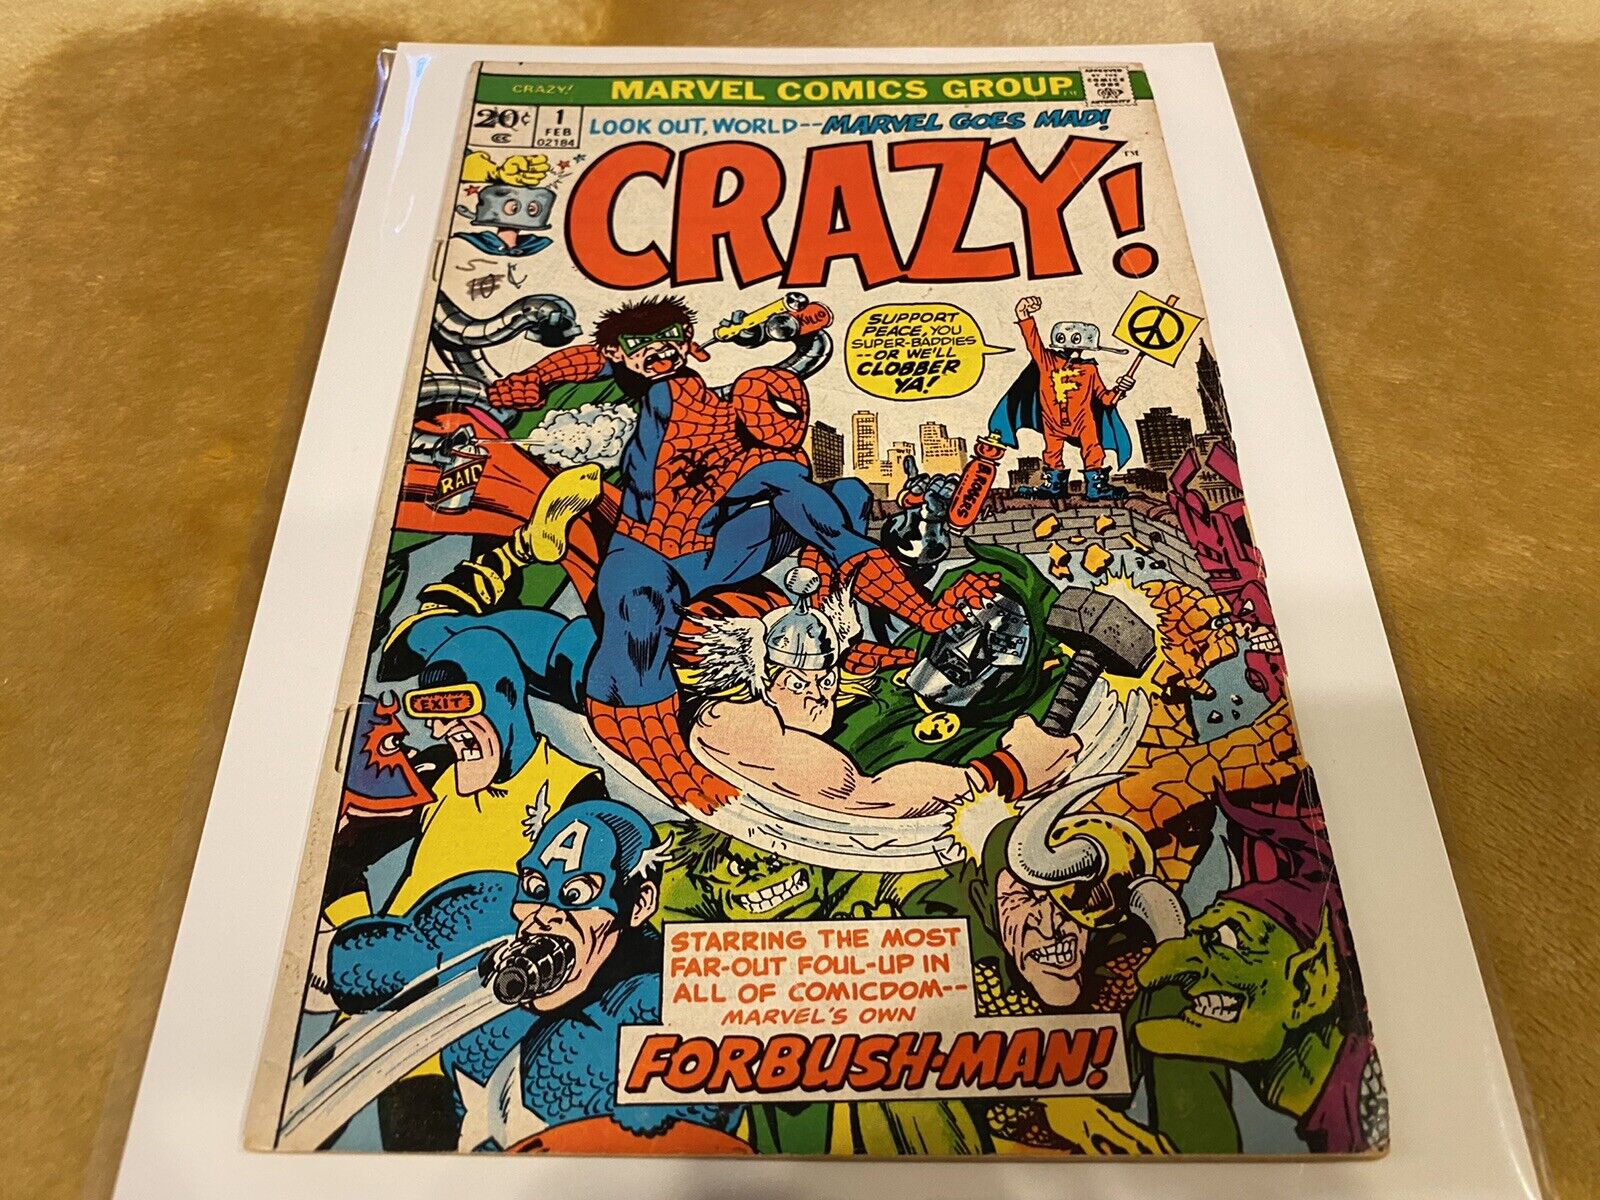 1972 Marvel Comics Crazy #1 Iconic Humor/Parody Issue Early App of Forbush Man